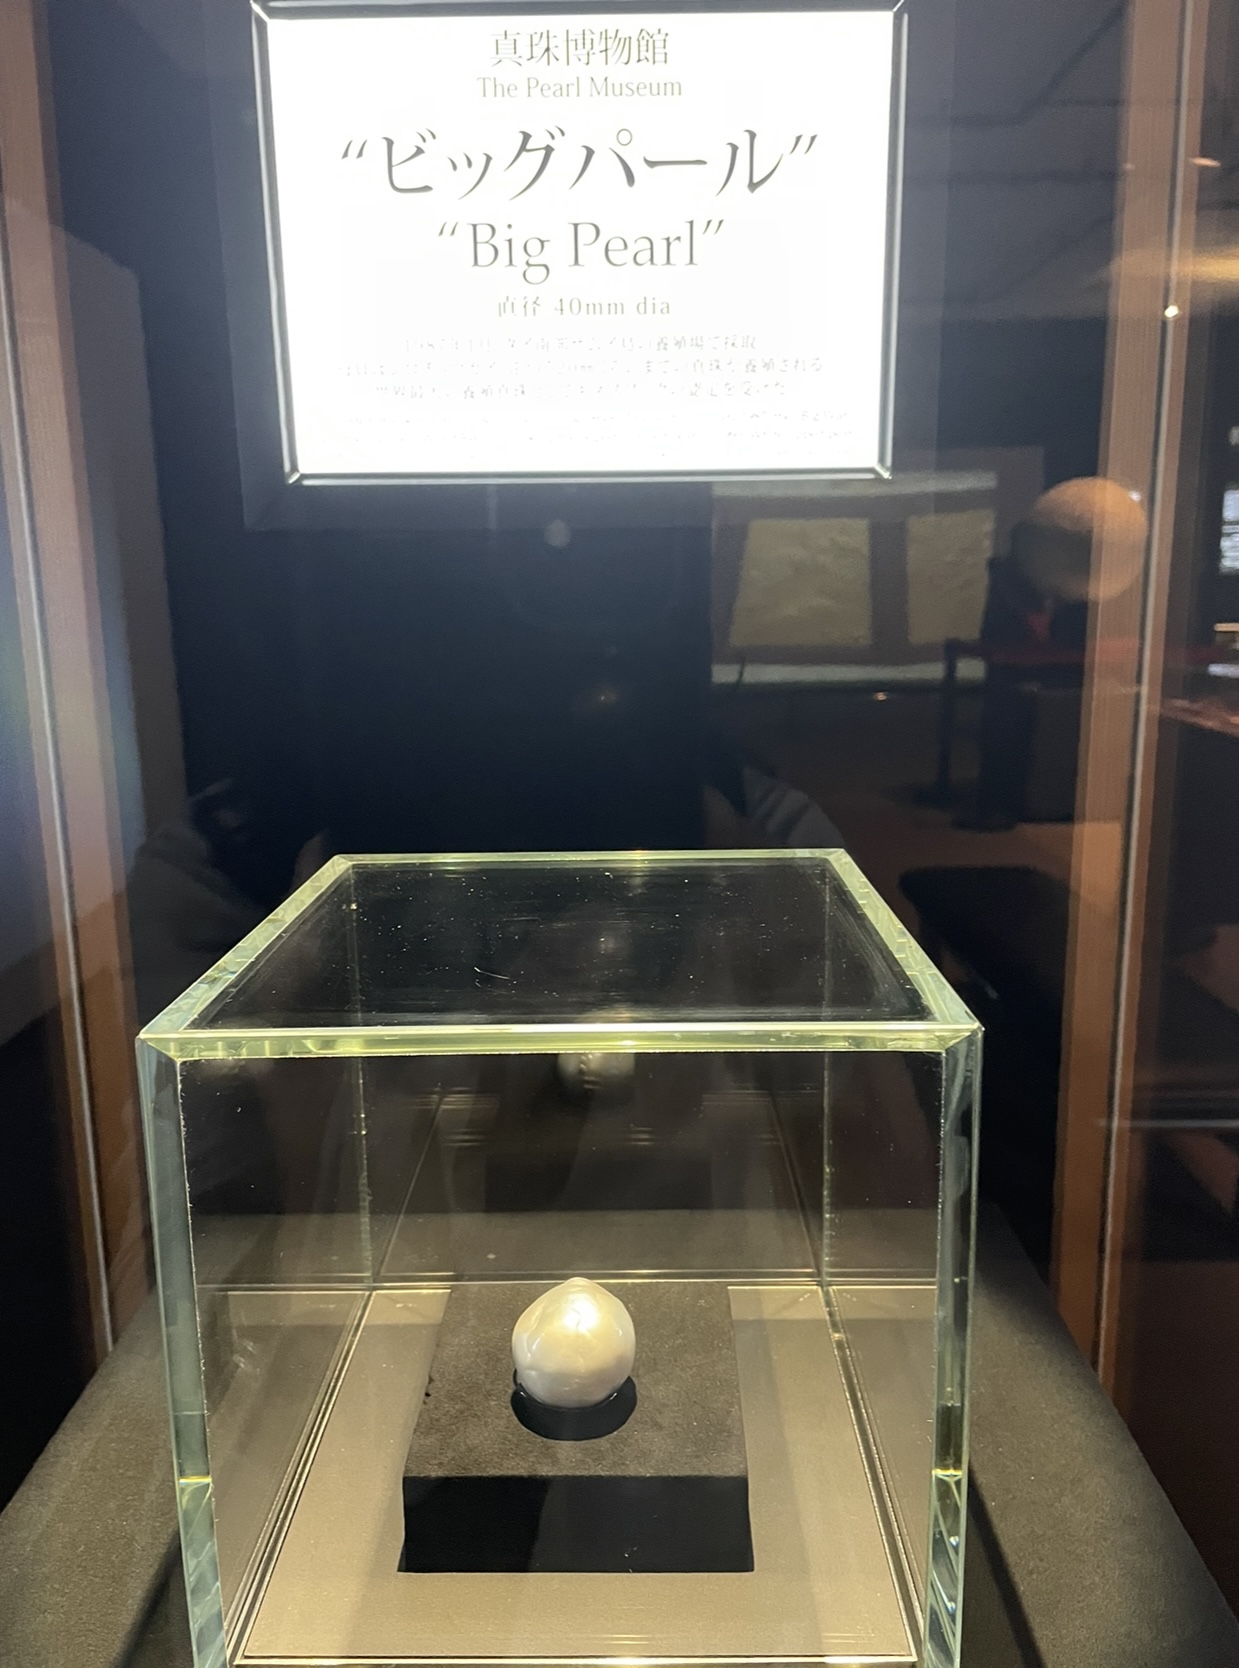 40 mm BIG pearl - Mikimoto Pearl Museum